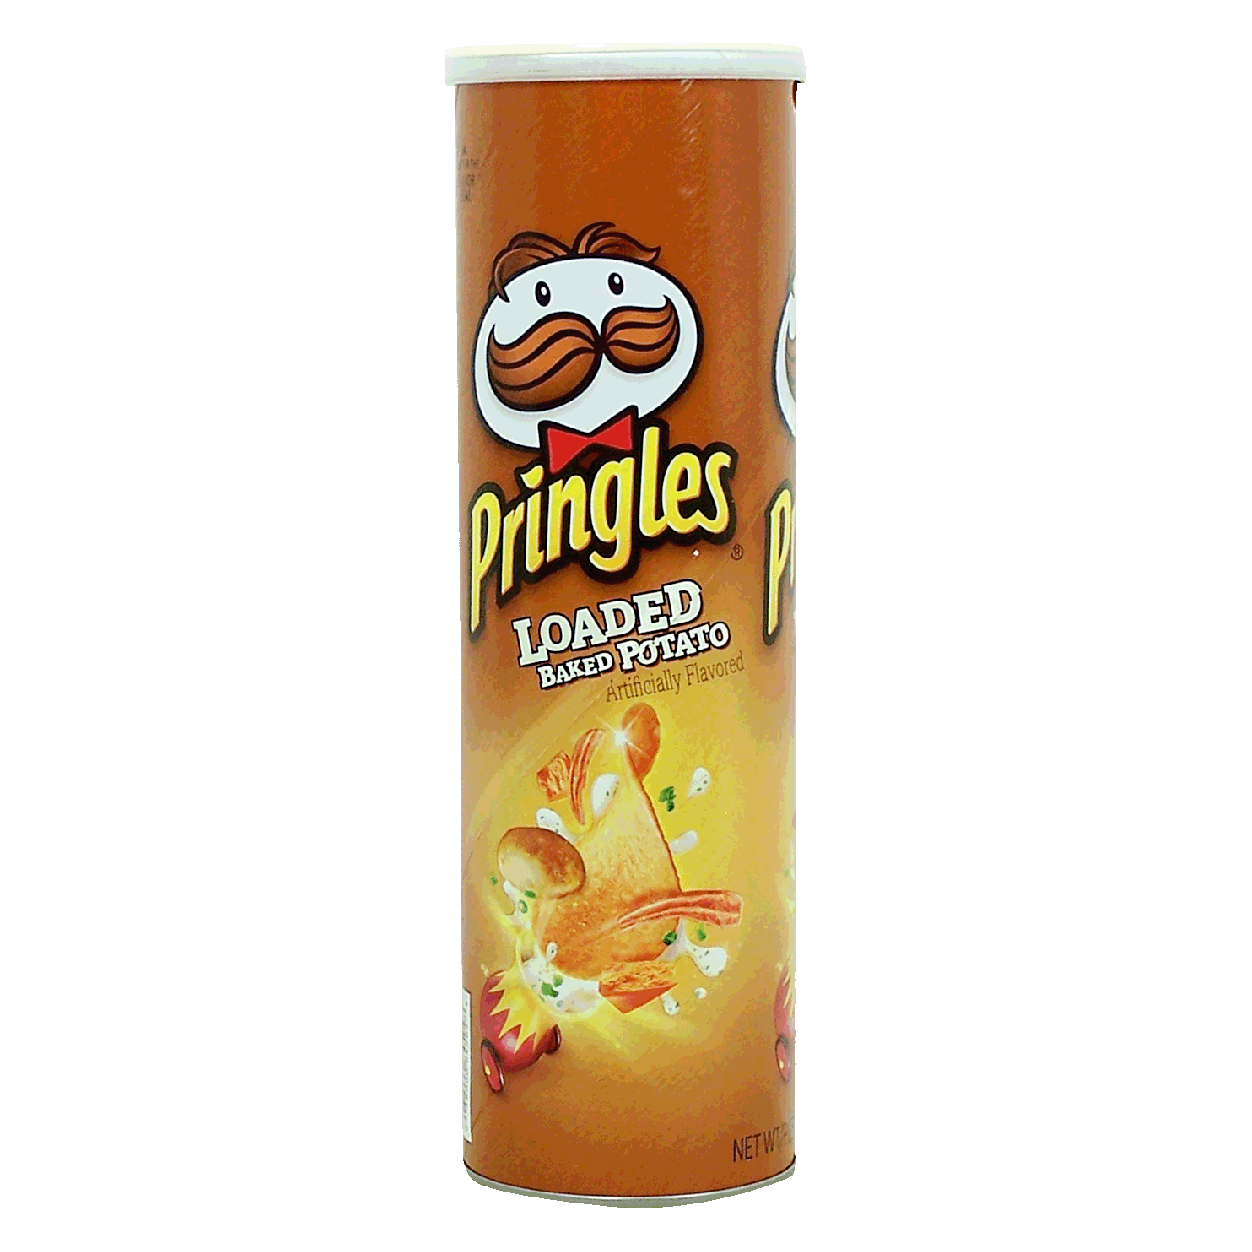 Pringles loaded baked potato flavored potato crisps 5.96oz - Chips ...